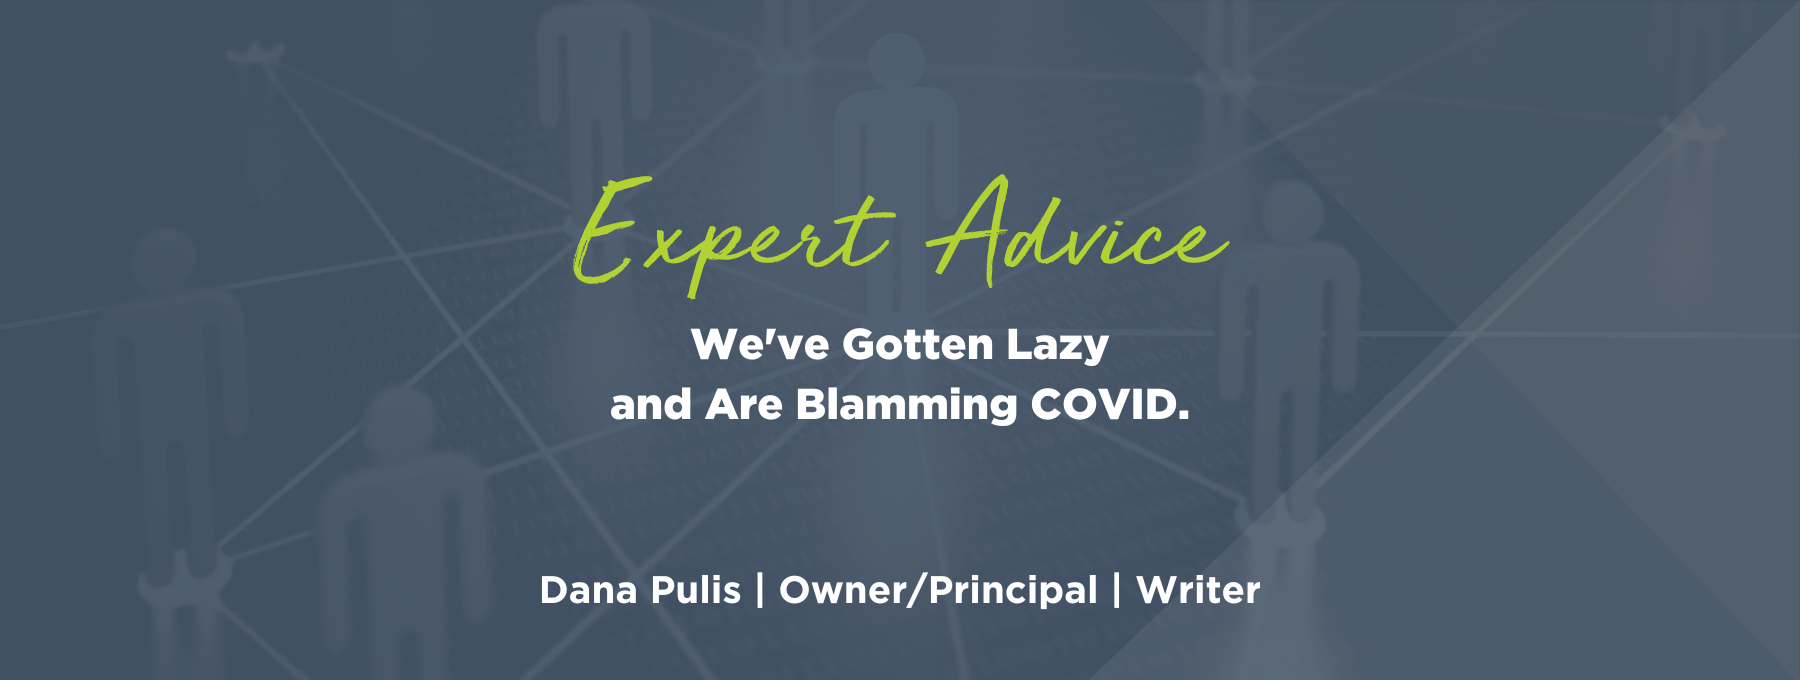 Don't blame COVID - Marketing